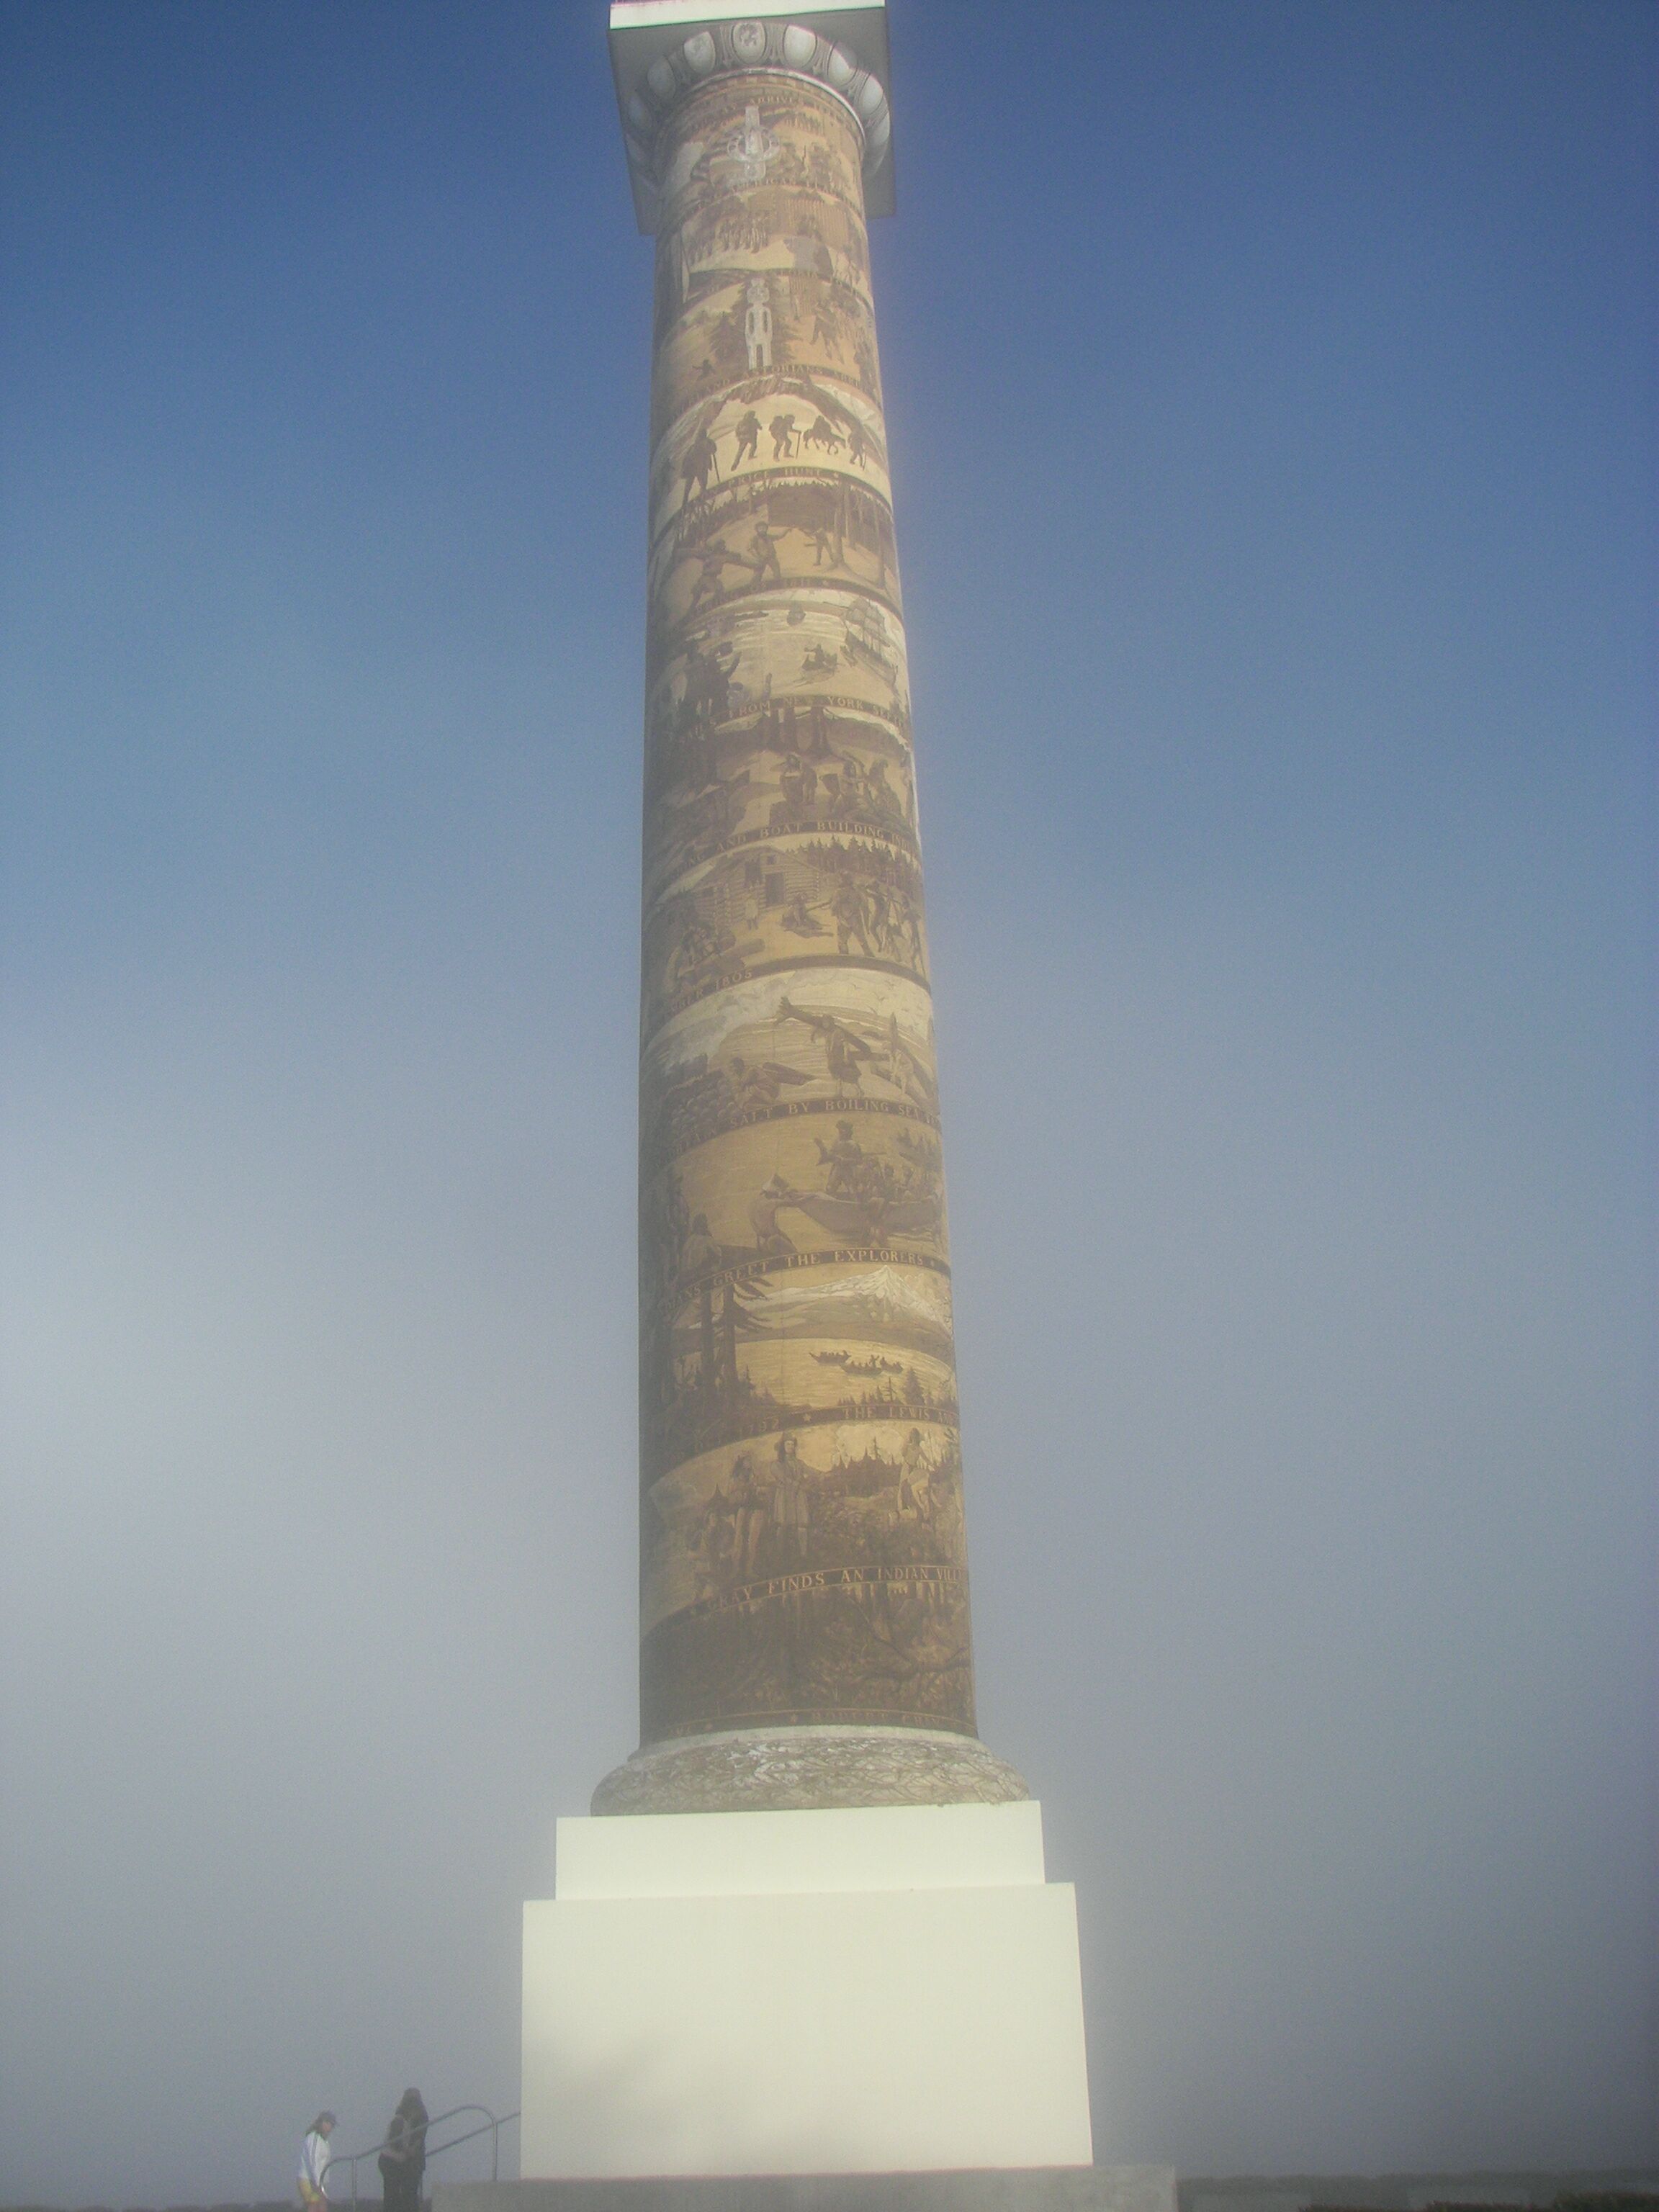 The Astoria Column-Built in 1926 is 125 feet tall.